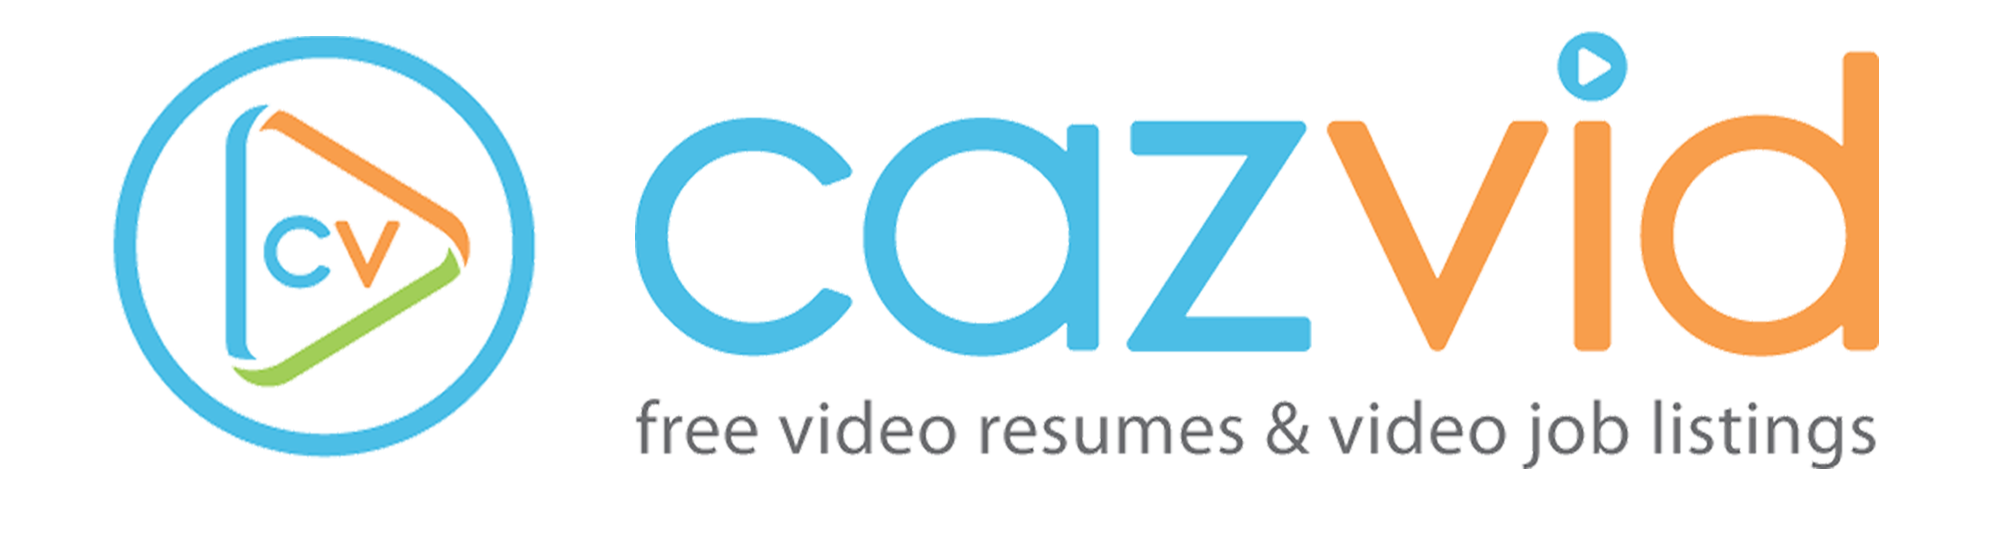 Logo CazVid Job Listing Video and Resume video